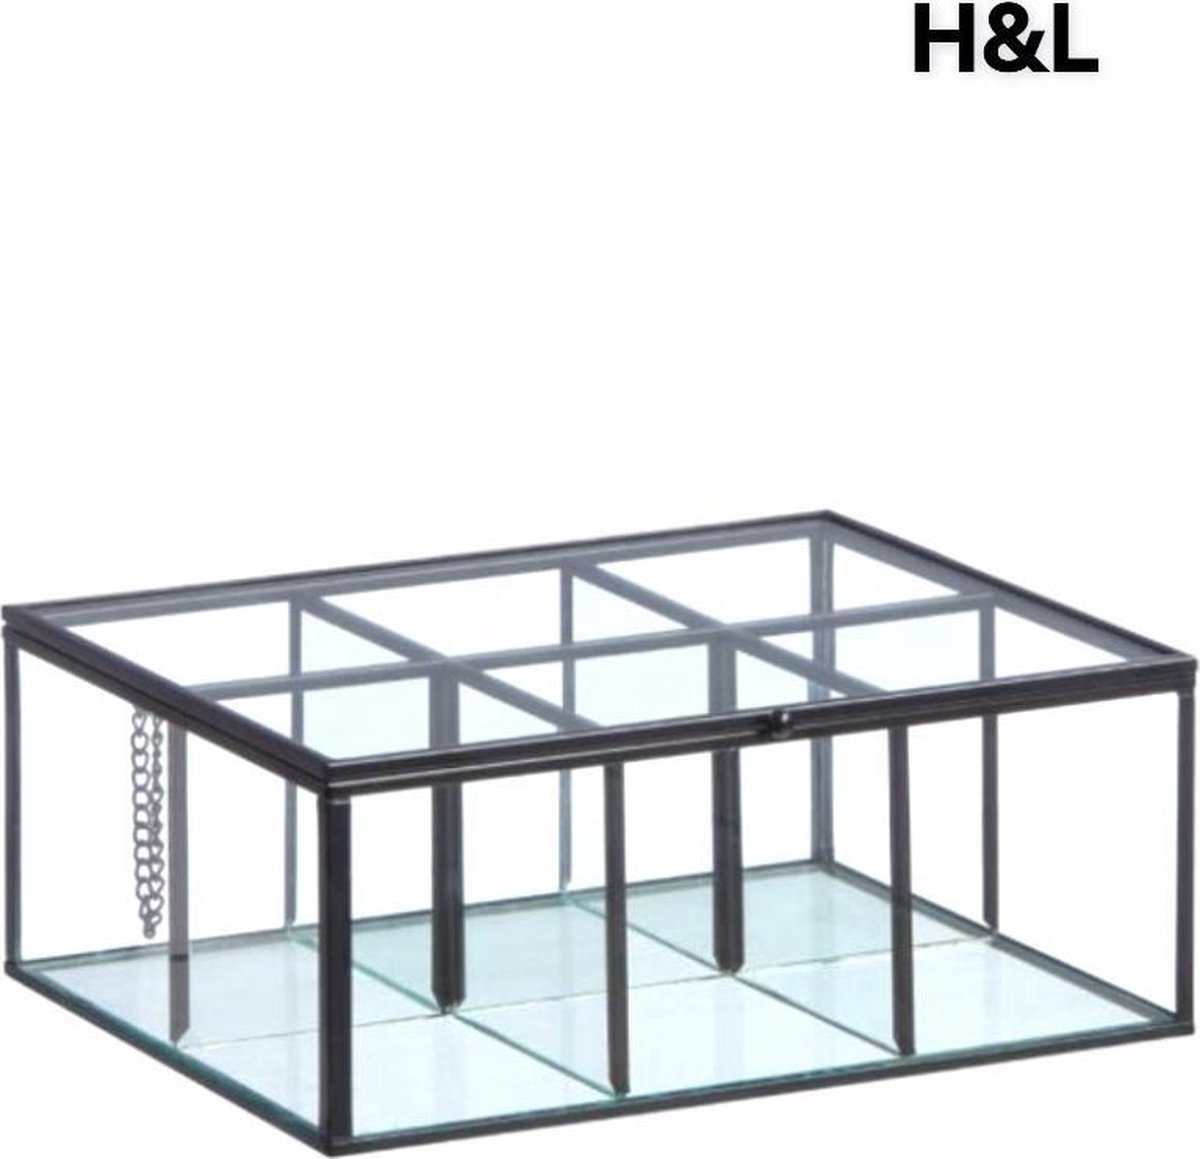 H&L theedoos glas / zwart / 6 vakjes / 22 x 16 x 9 cm | bol.com